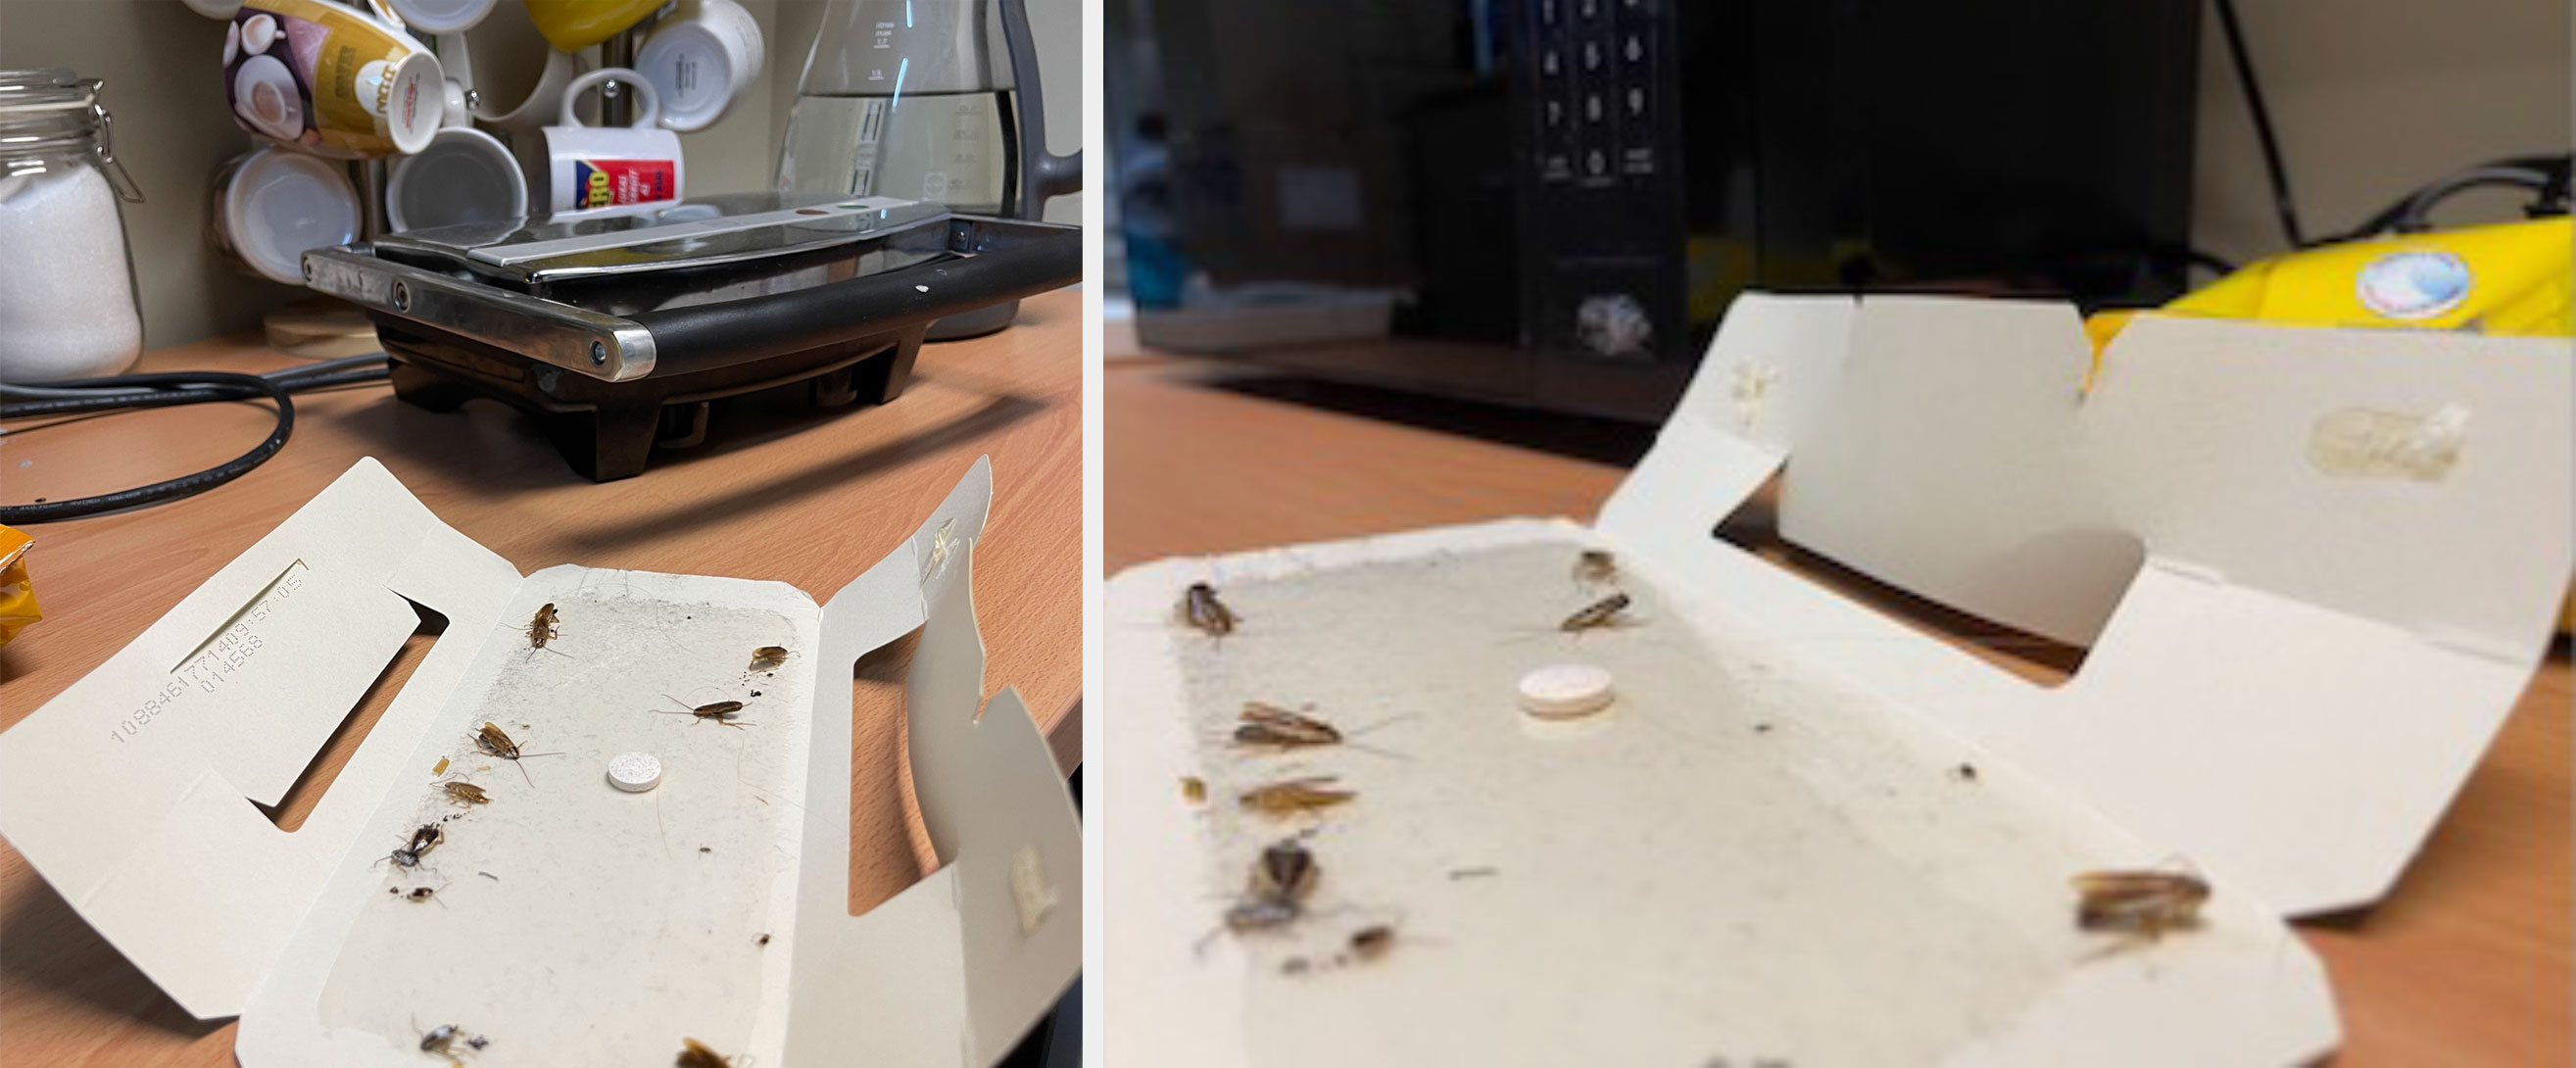 Precision Pest Control workplace cockroach infestation